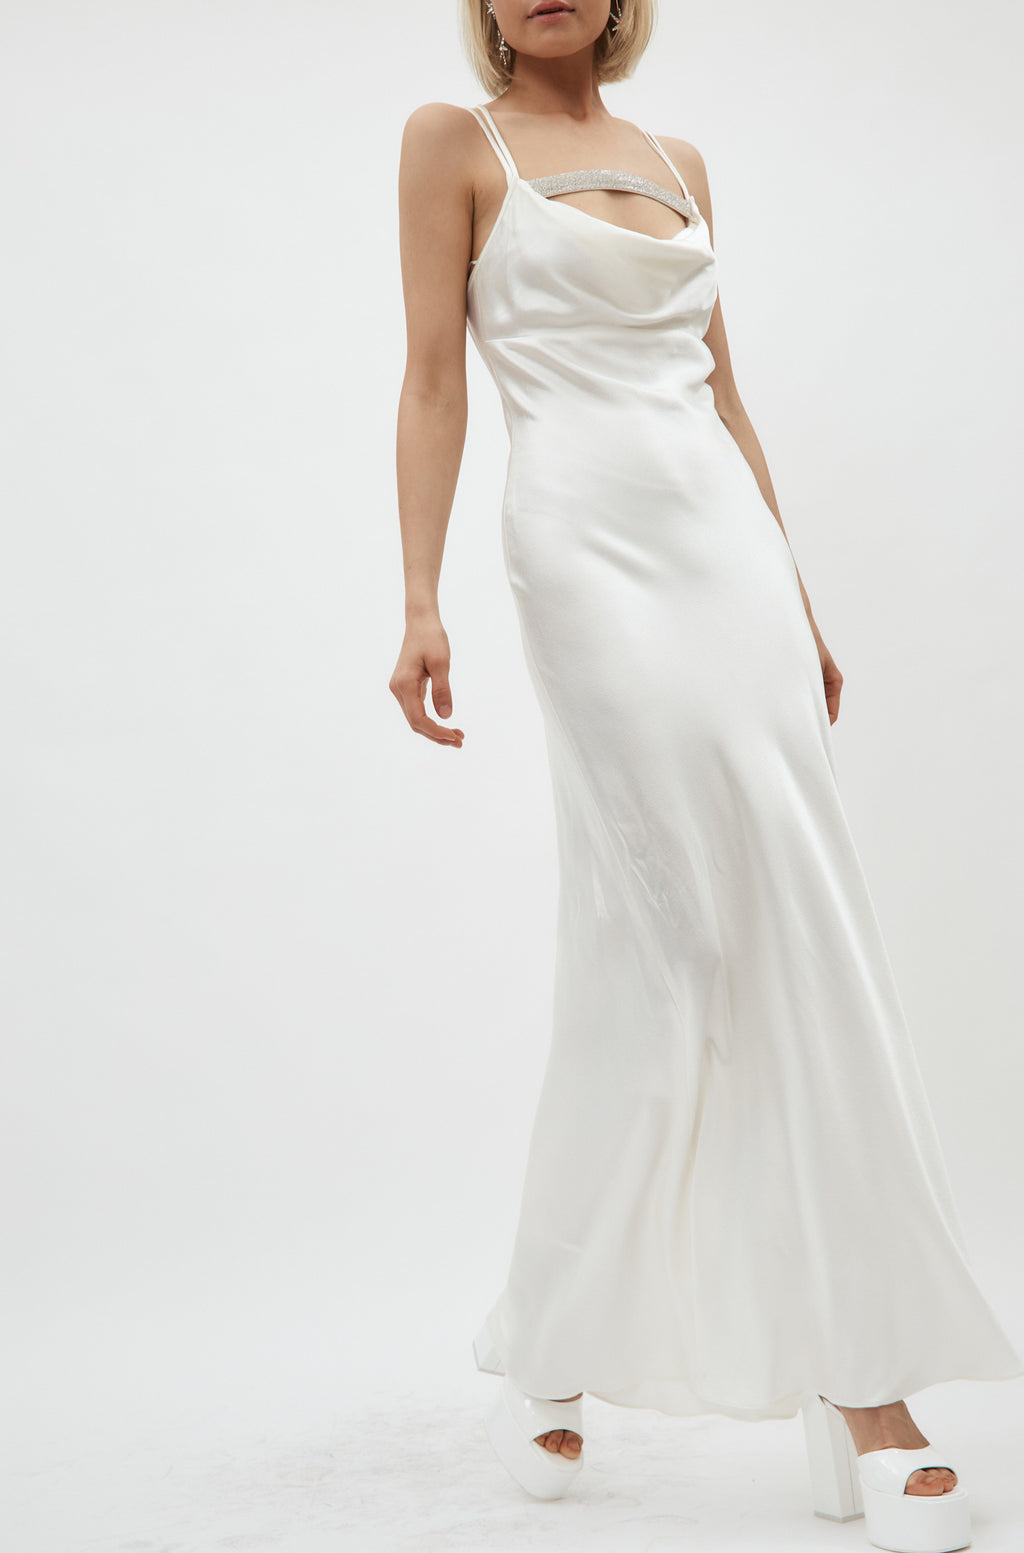 Venus White Dress